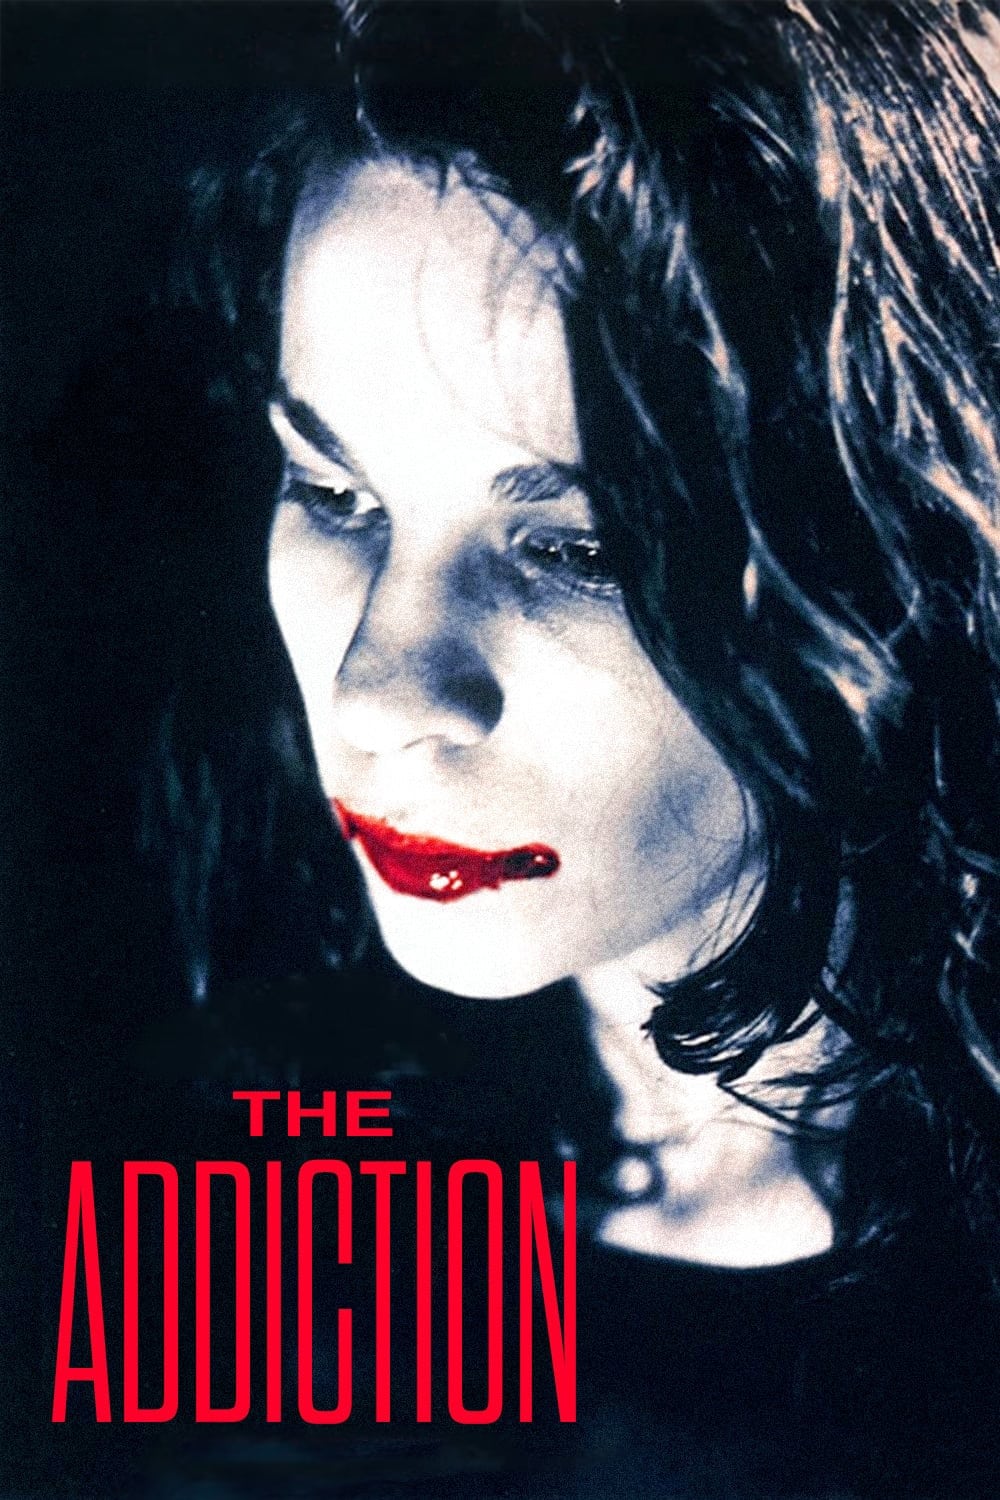 The Dark Is Their Sunlight - The Addiction (1995)